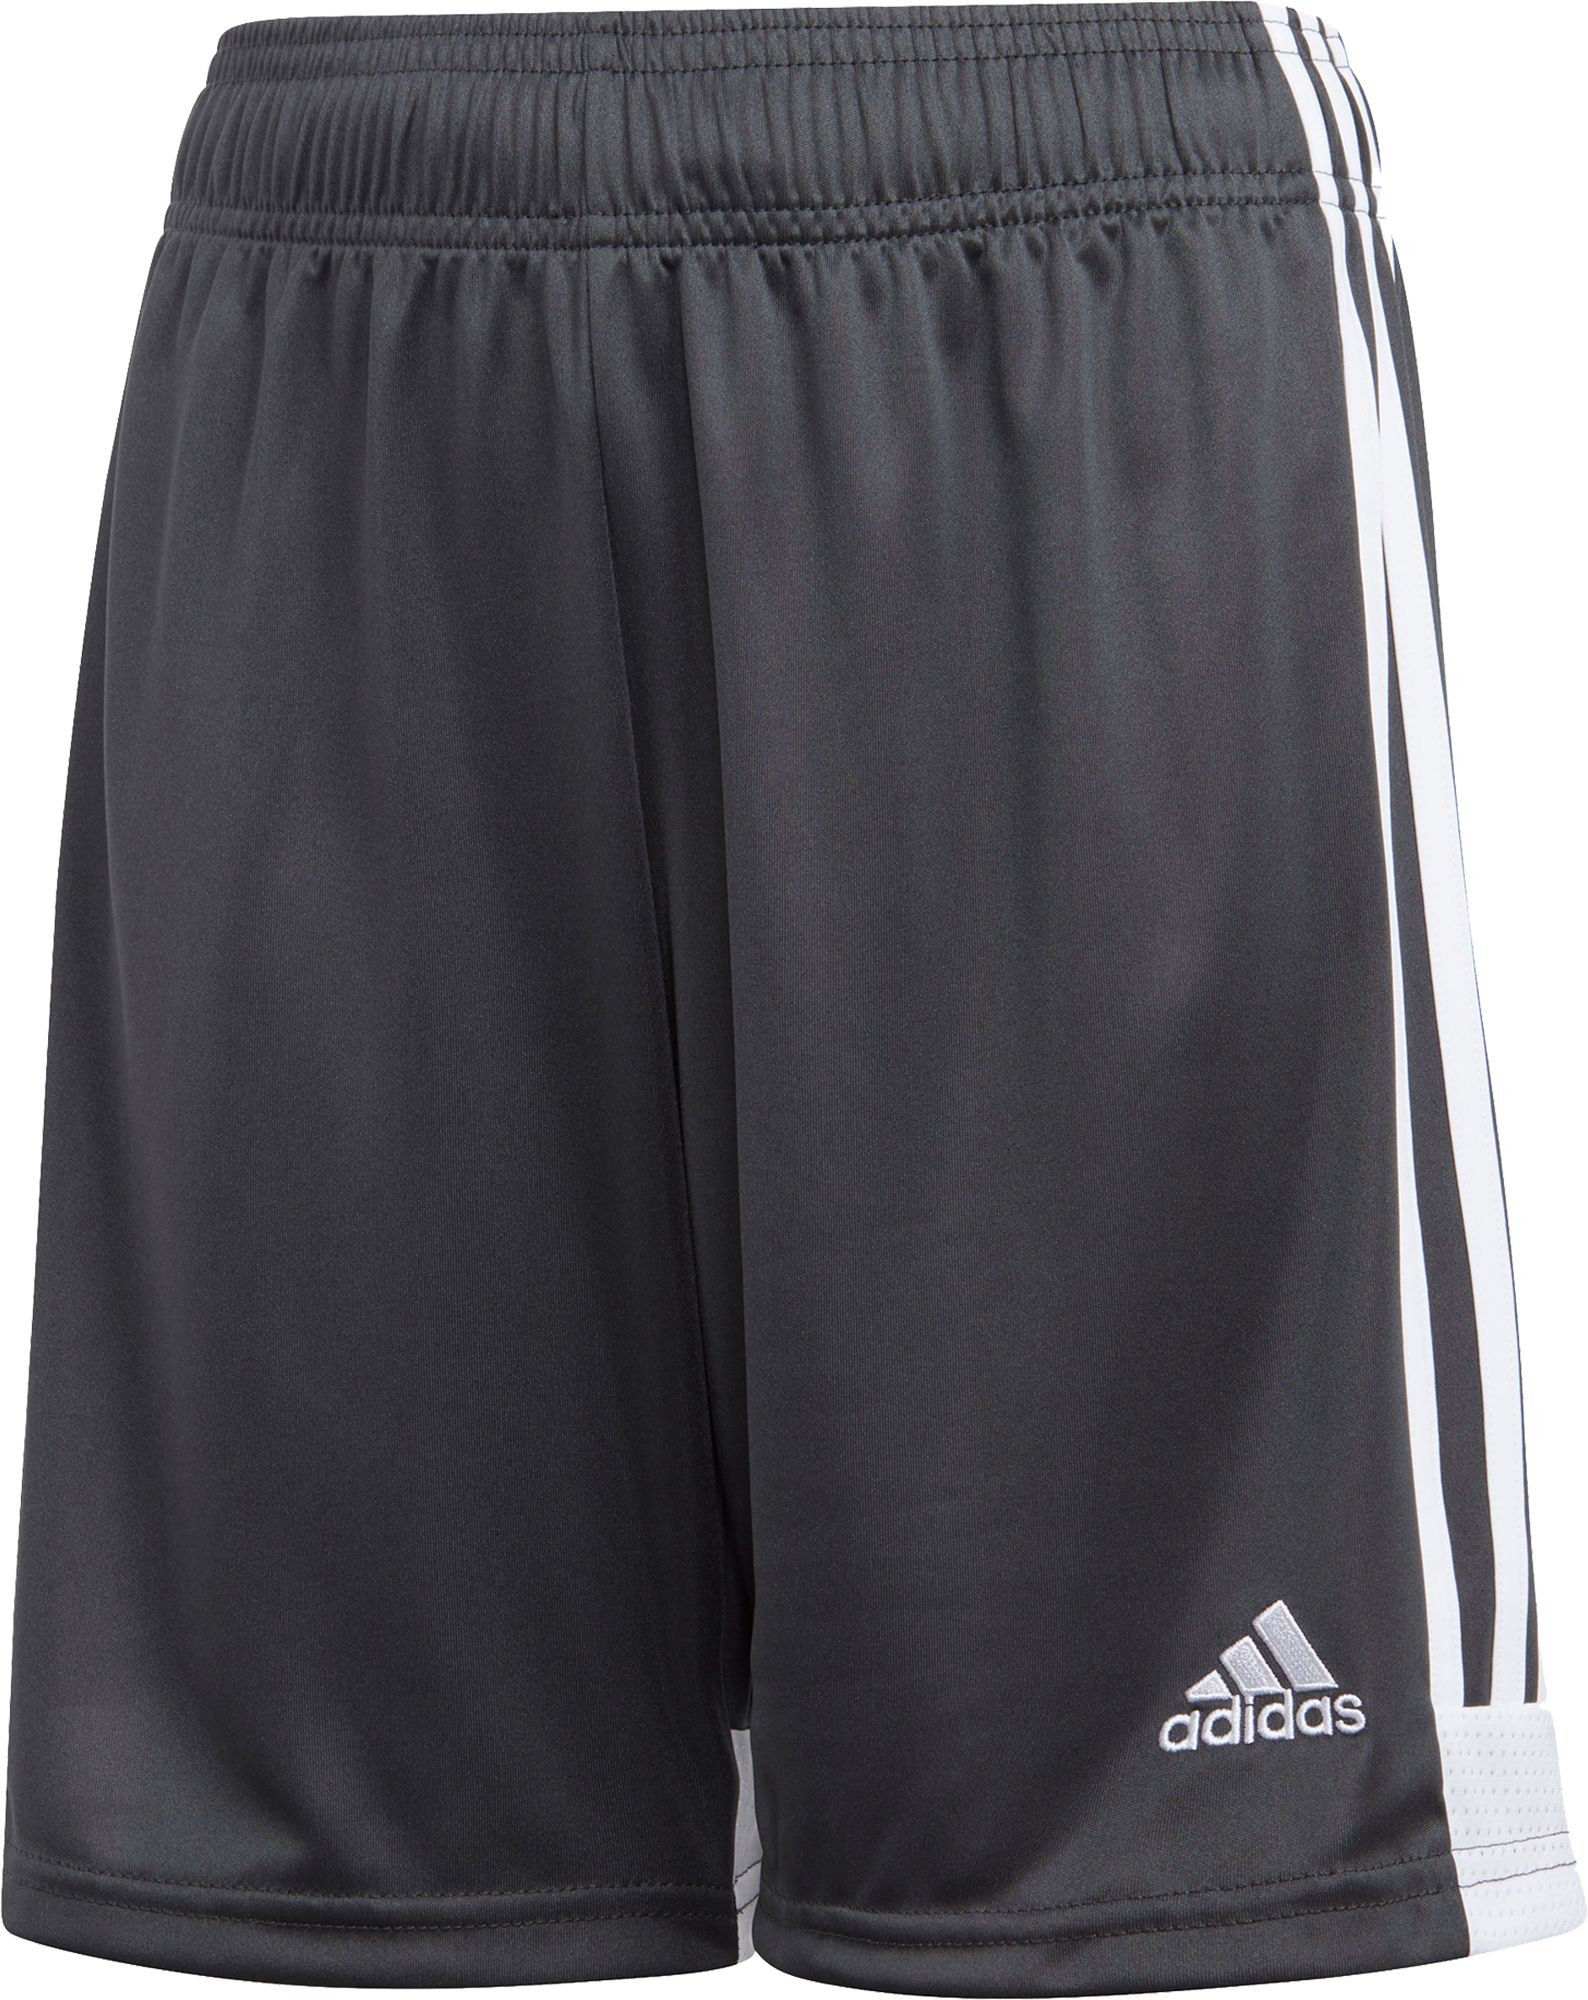 adidas boys shorts